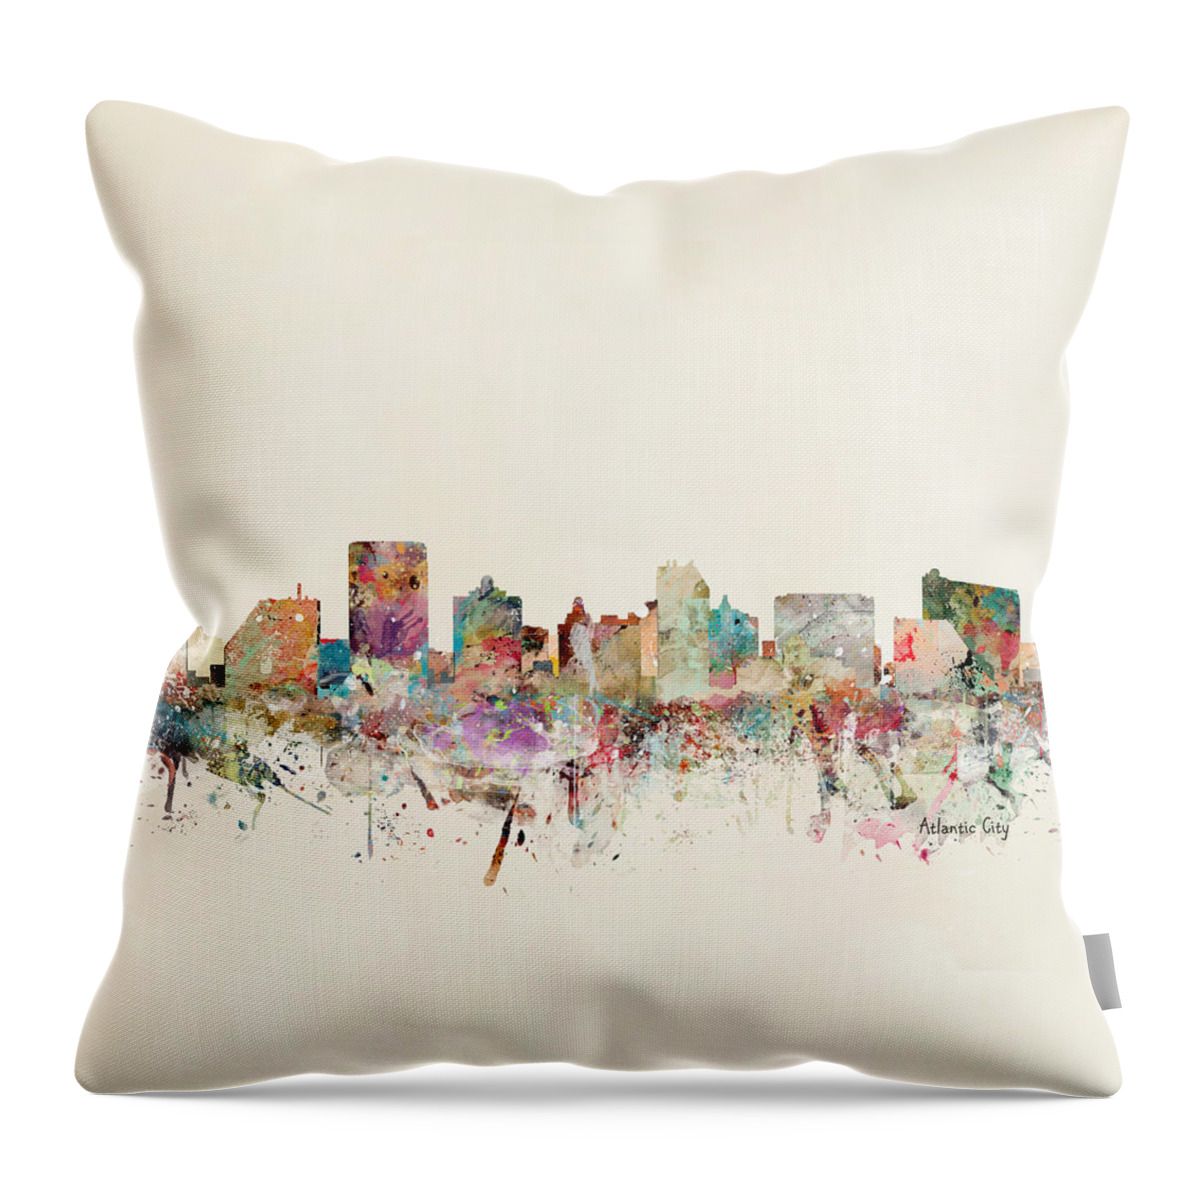 Atlantic City Throw Pillow featuring the painting Atlantic City Skyline by Bri Buckley